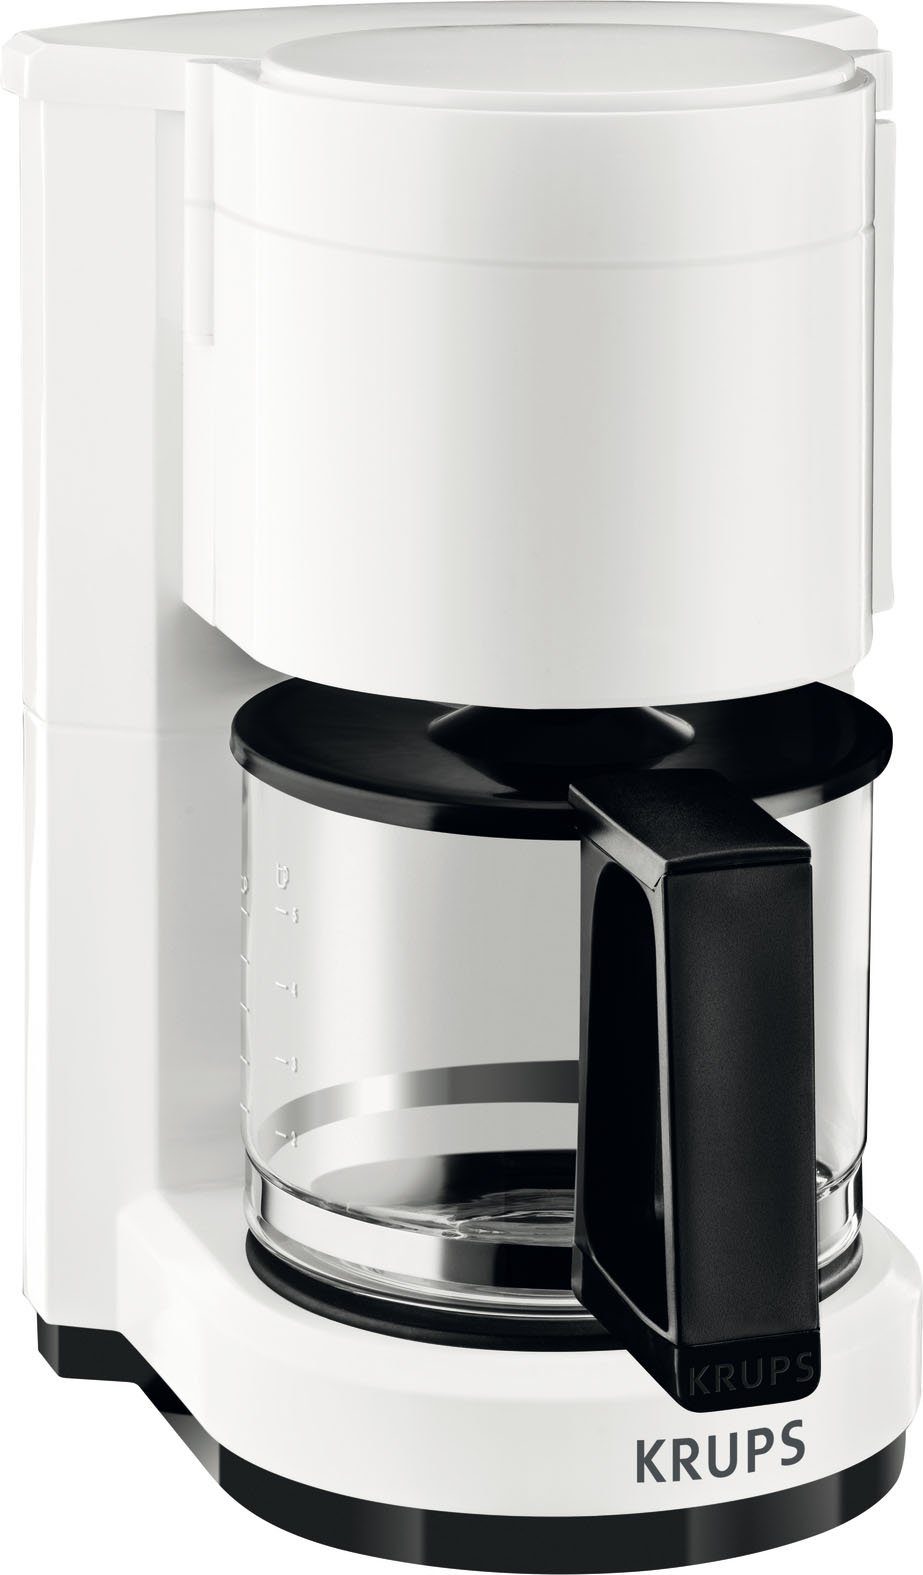 Krups Filterkaffeemaschine Kaffeekanne, Kaffee, mit 0,6l nach Warmhaltefunktion 30 Abschaltung F18301 Tassen Warmhaltefunktion, Filterhalter, für Minuten automatischer Aromacafe, herausnehmbarer 5-7